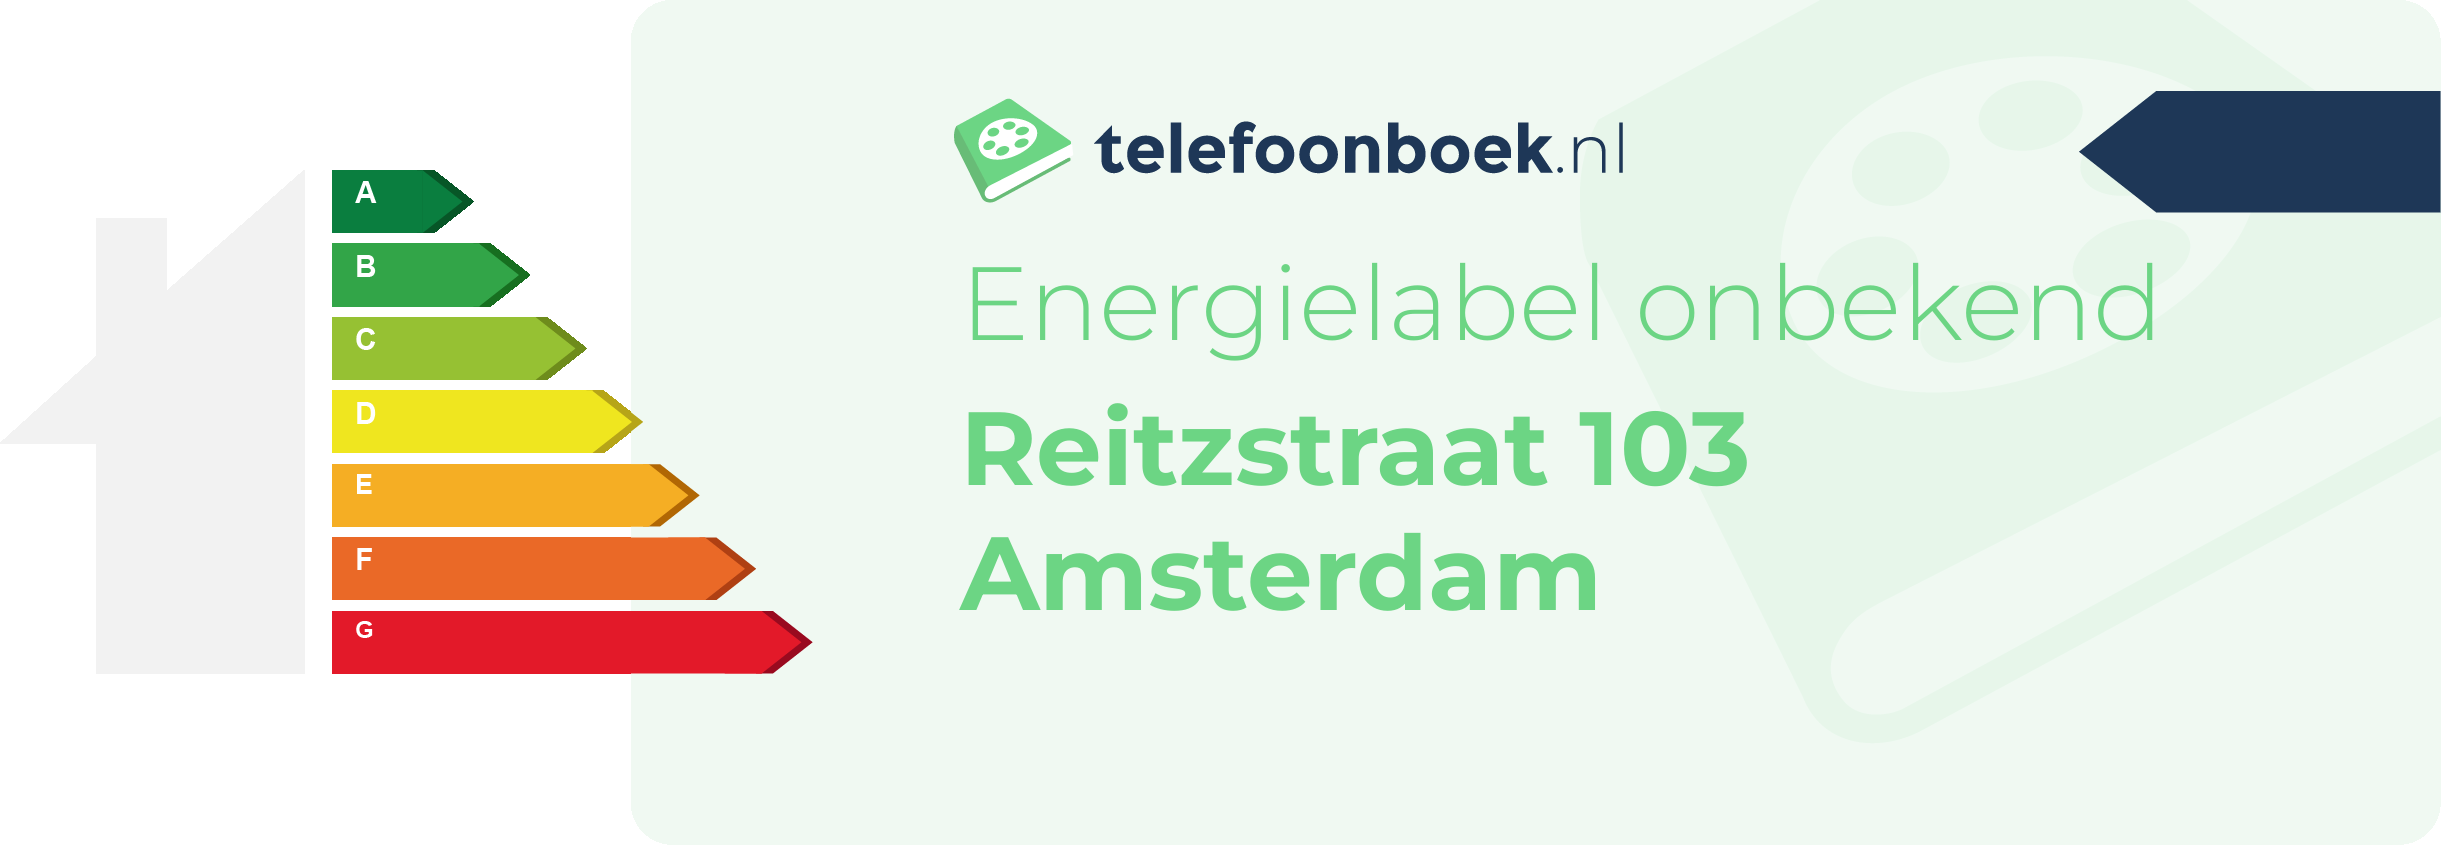 Energielabel Reitzstraat 103 Amsterdam